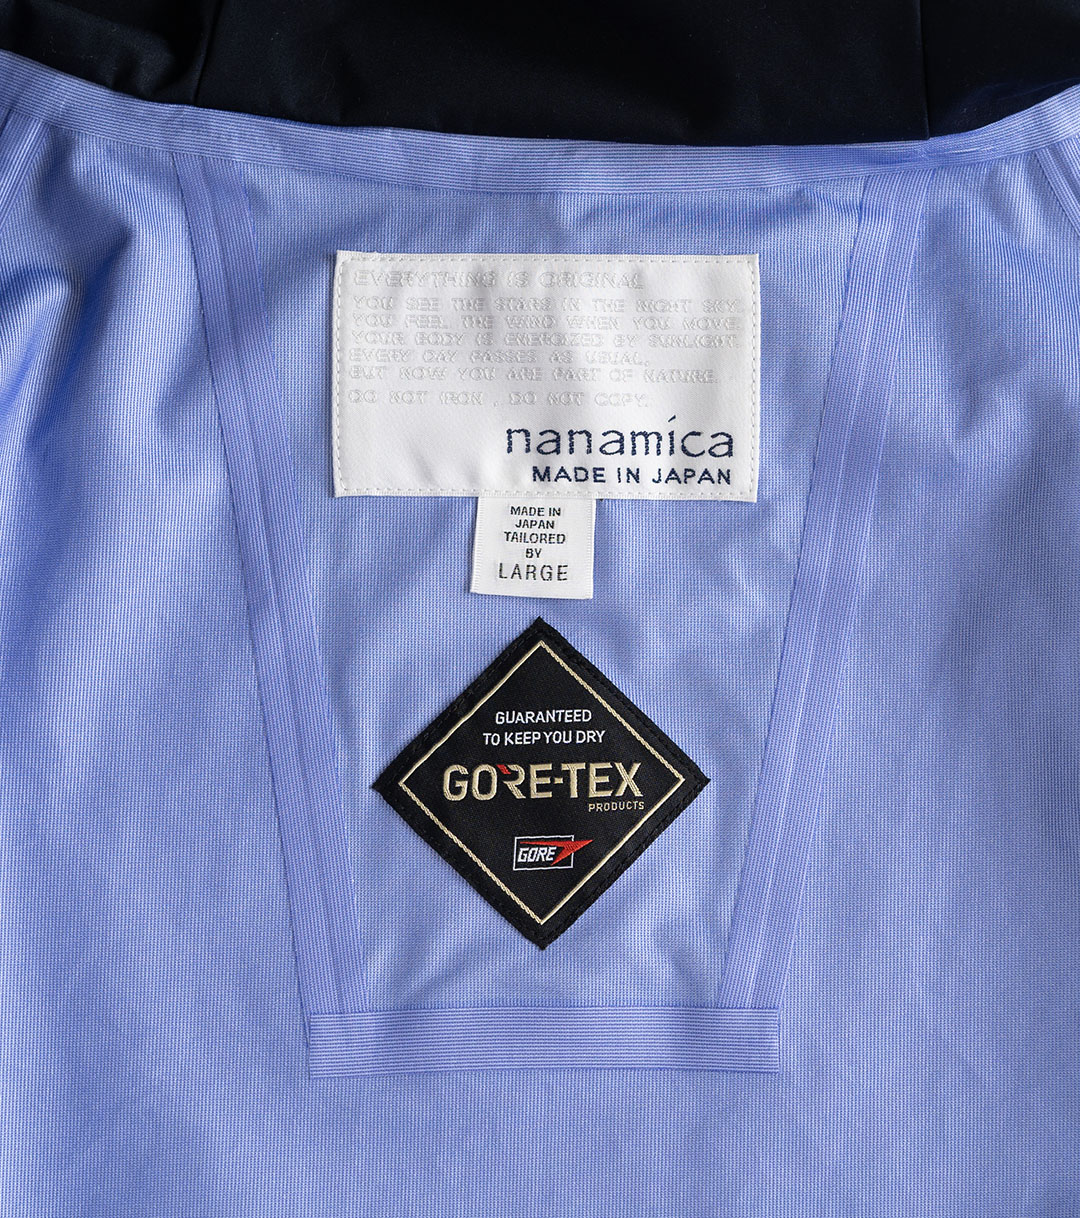 nanamica / GORE-TEX Cruiser Jacket